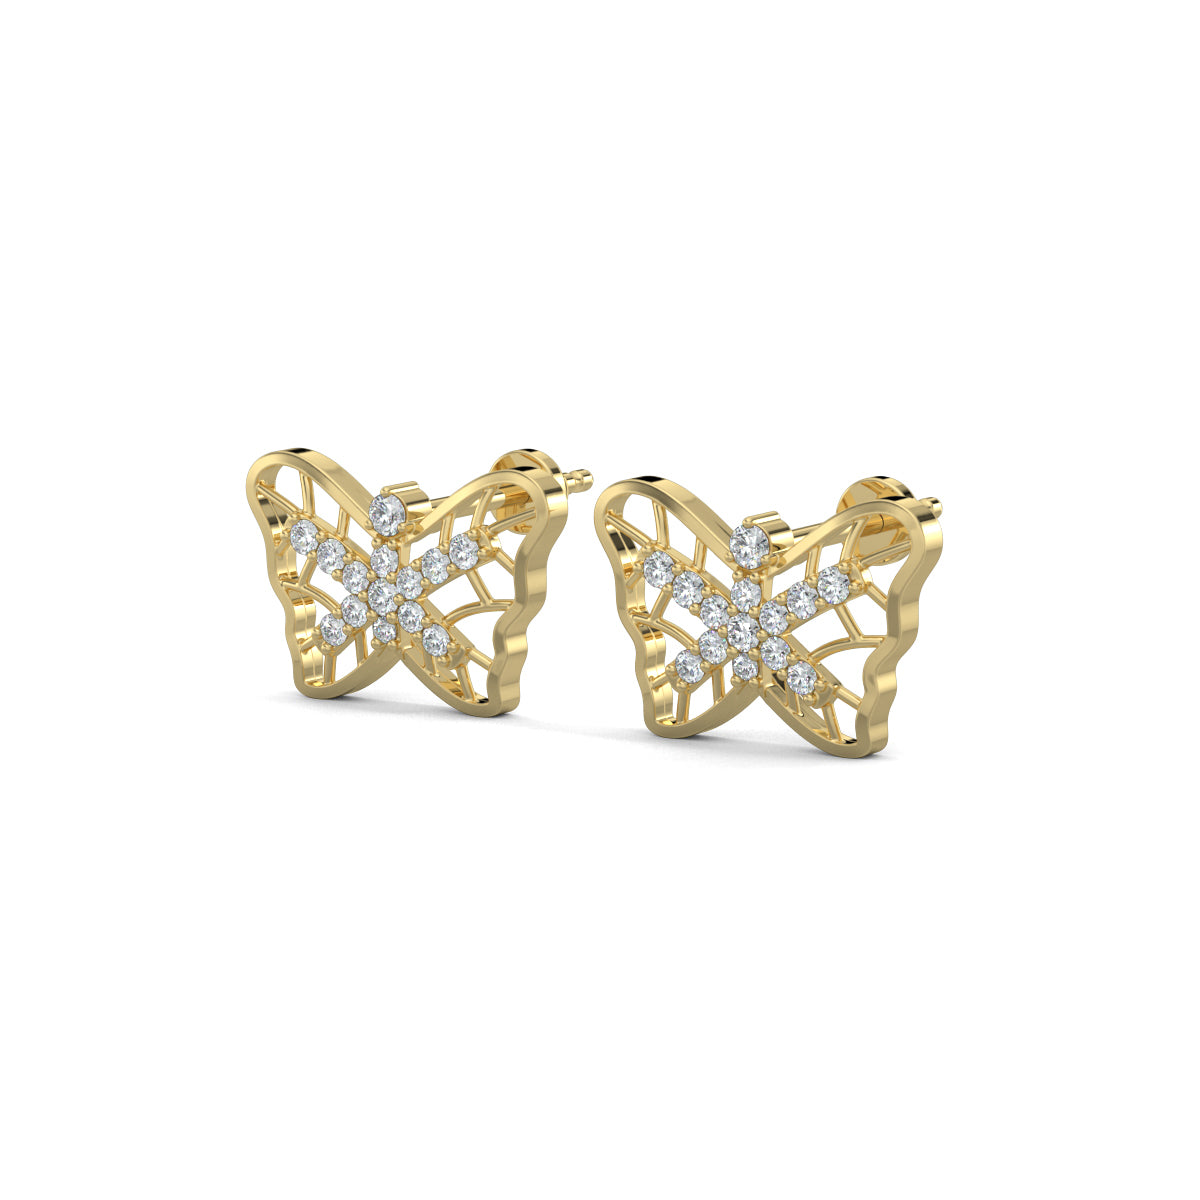 Yellow Gold, Diamond Earrings, Natural diamonds stud earrings, Lab-grown diamond stud earrings, Wing shape earrings, Diamond embellished wing earrings, Elegant diamond studs